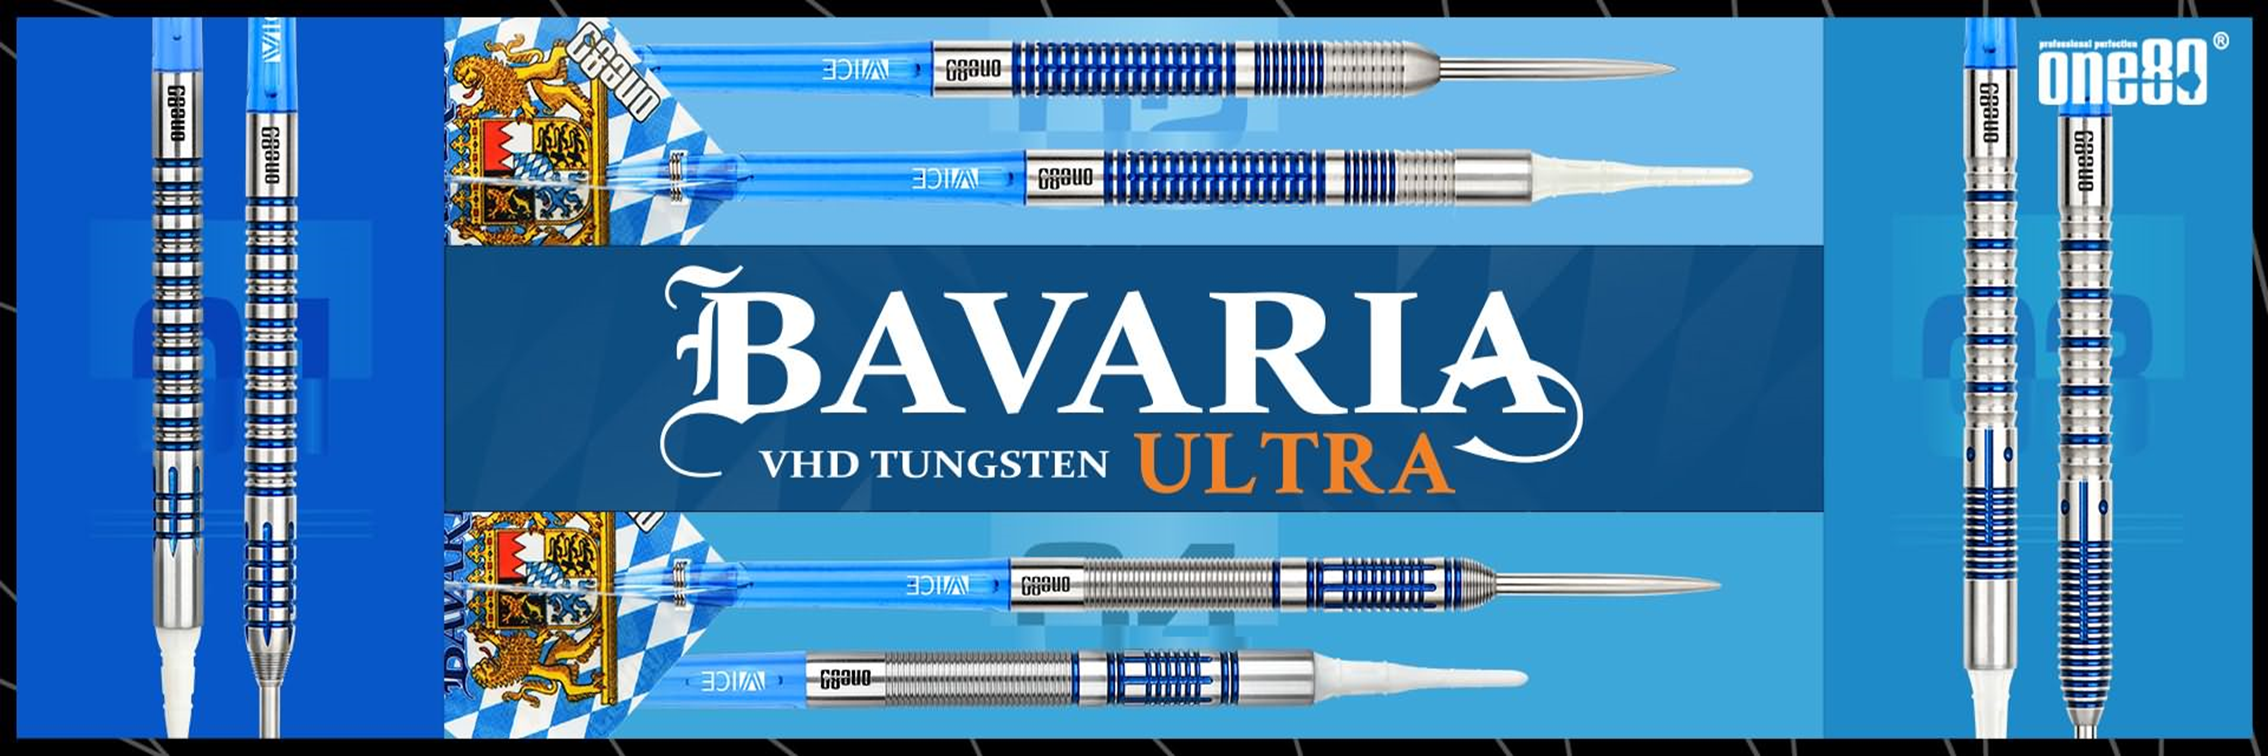 One80-Bavaria-Ultra-Darts-Banner